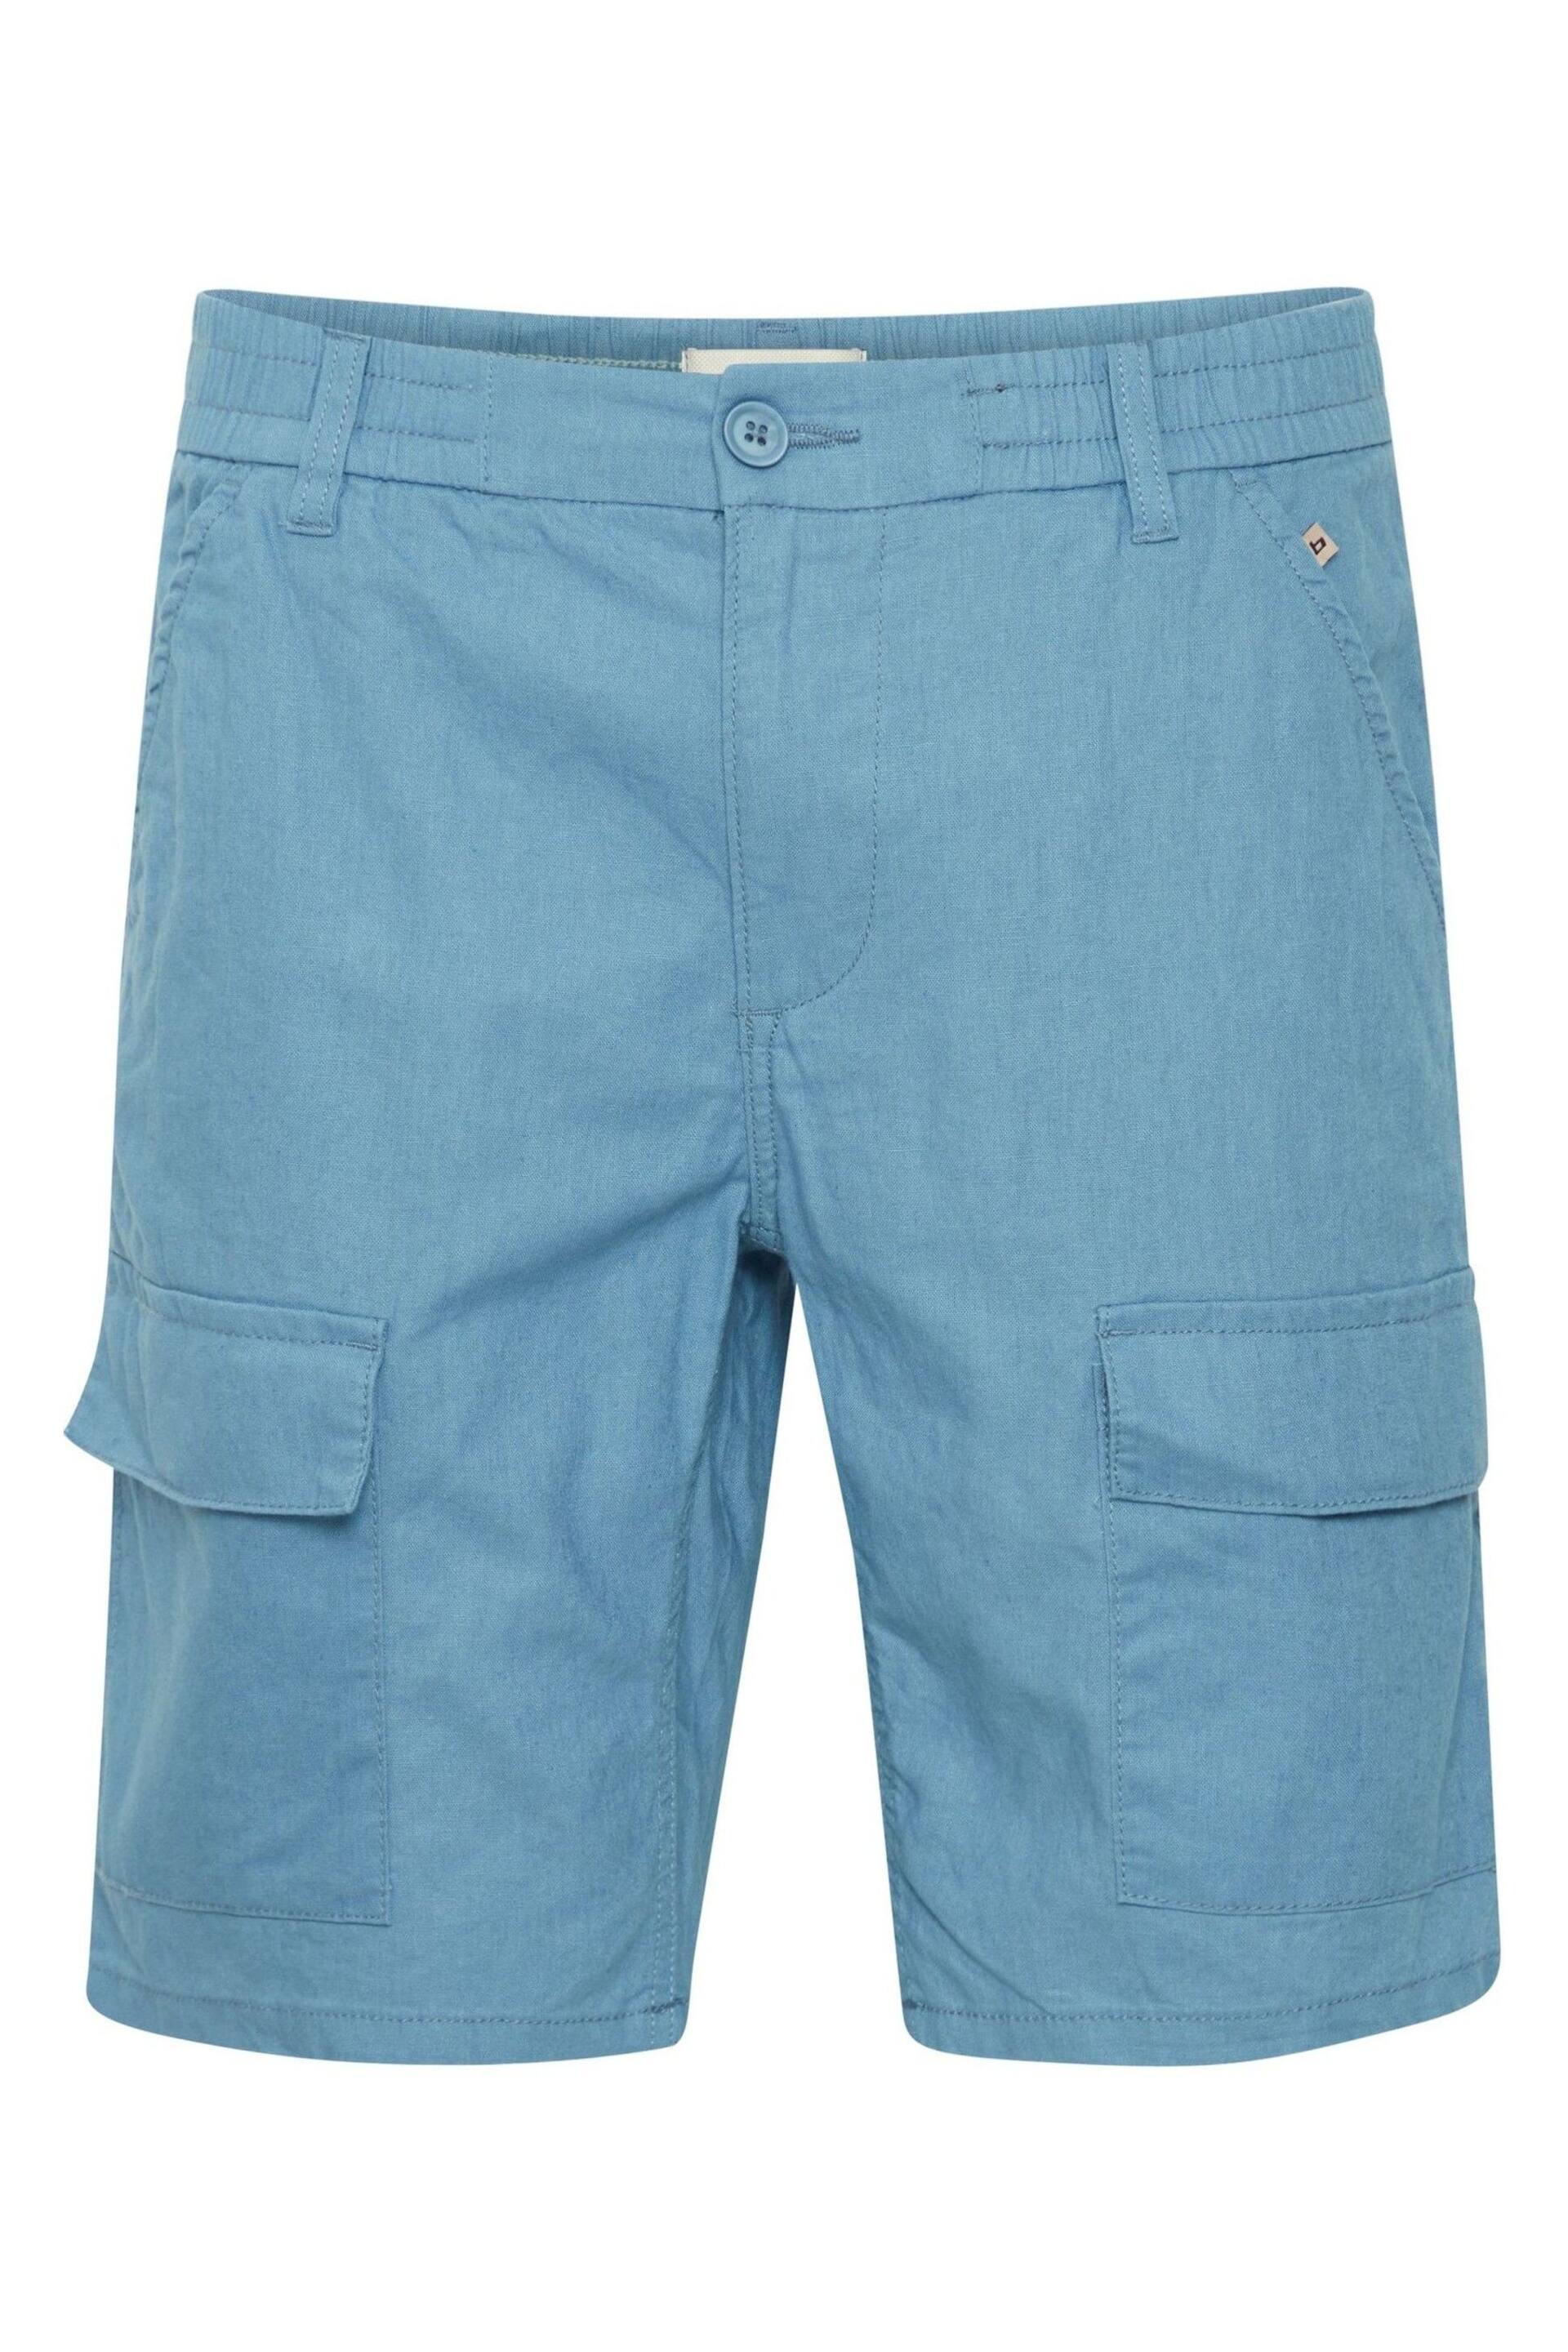 Blend Blue Linen Cargo Shorts - Image 5 of 5